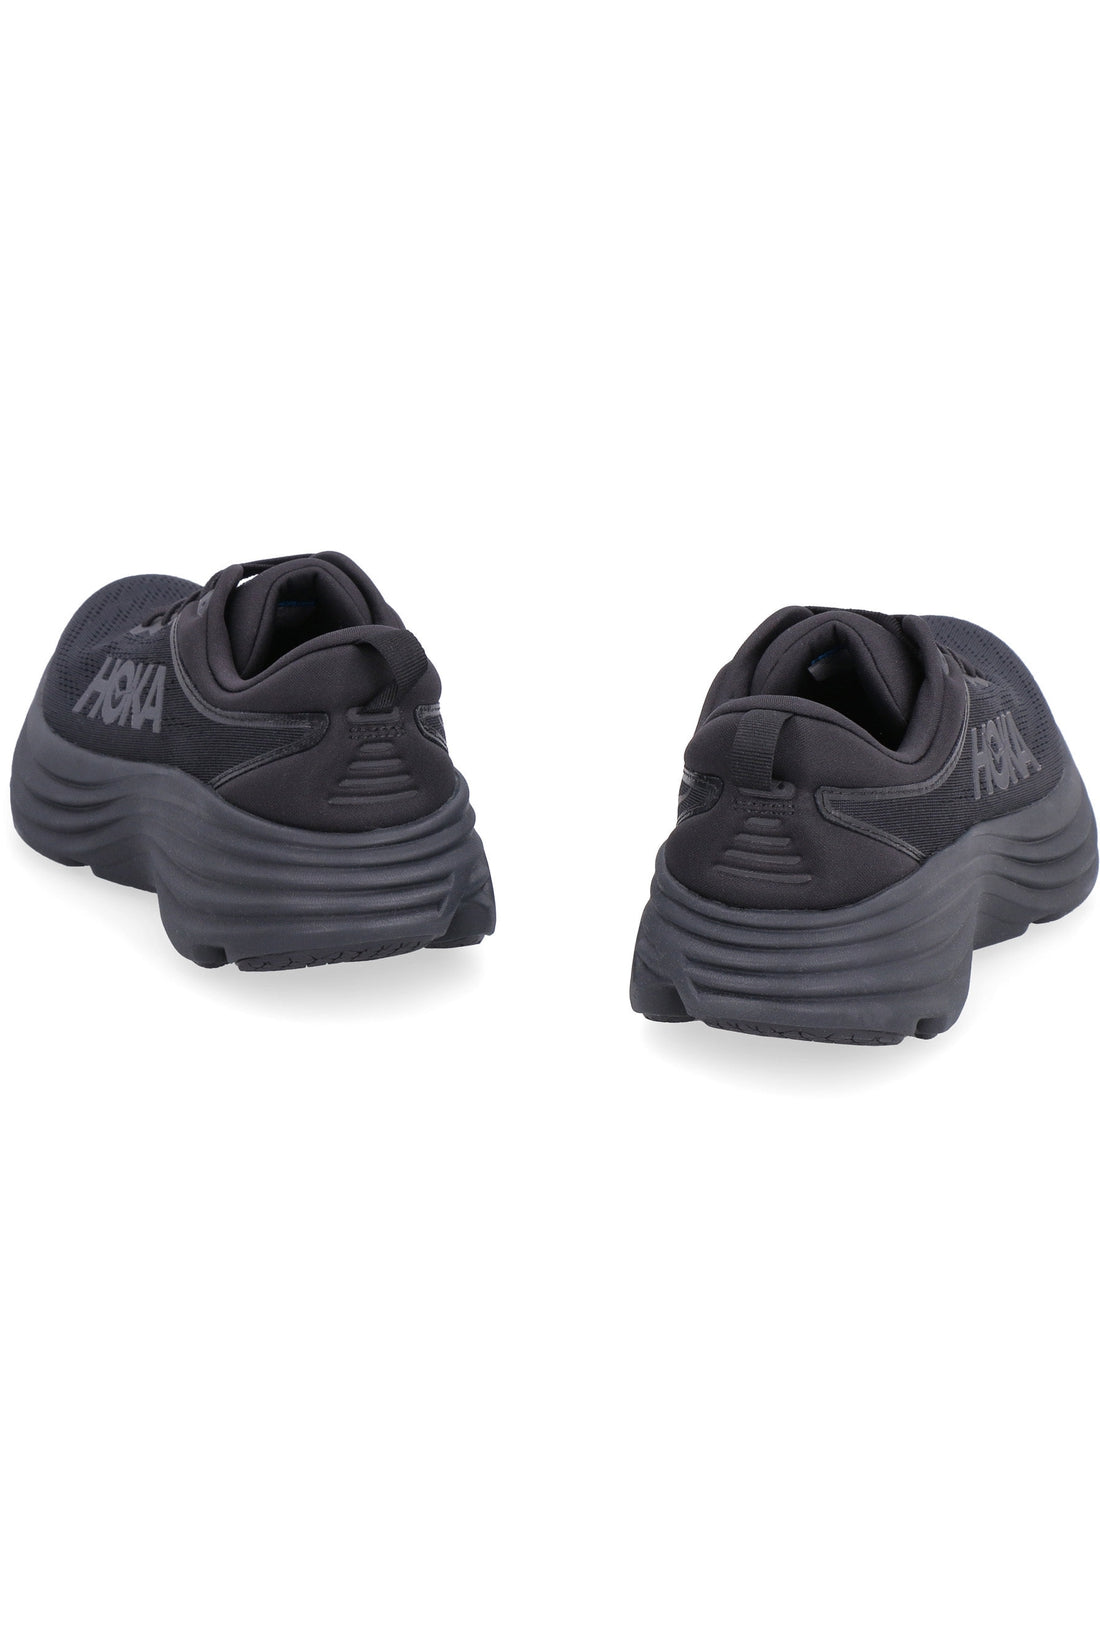 Hoka One One-OUTLET-SALE-Bondi 8 mesh sneakers-ARCHIVIST